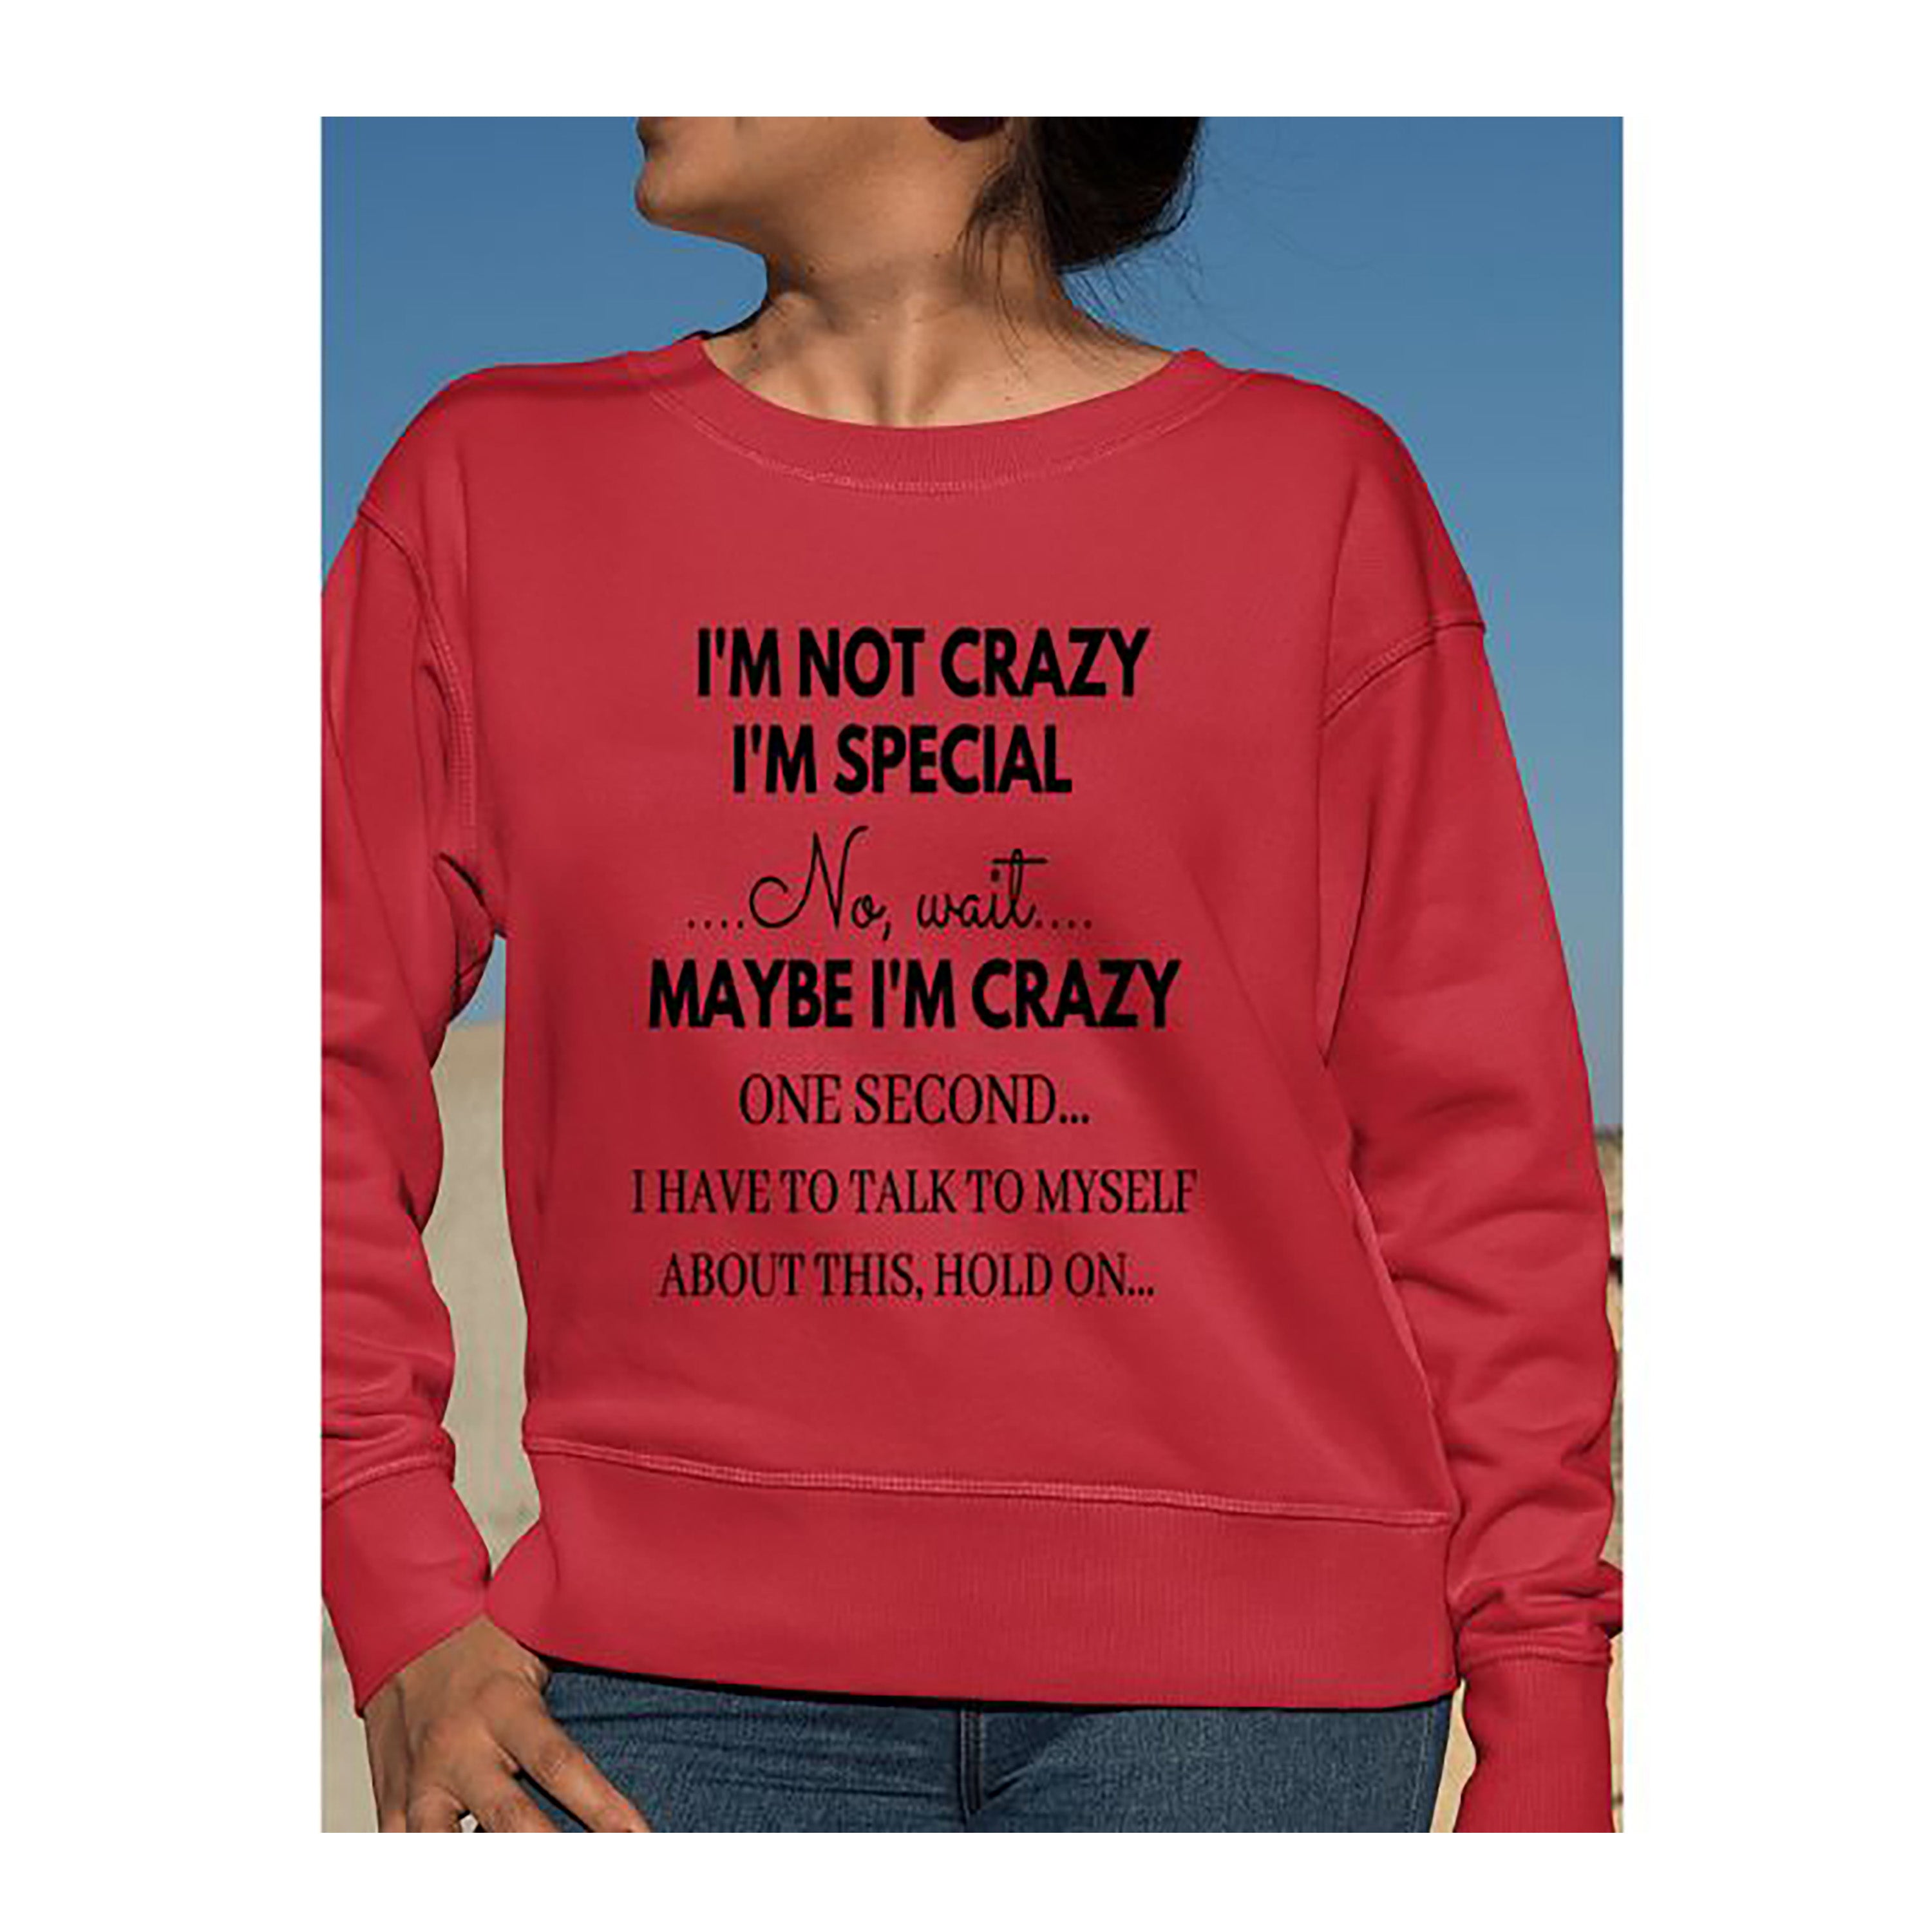 "I M NOT CRAZY I AM SPECIAL" Hoodie & Sweatshirt (Black Design)